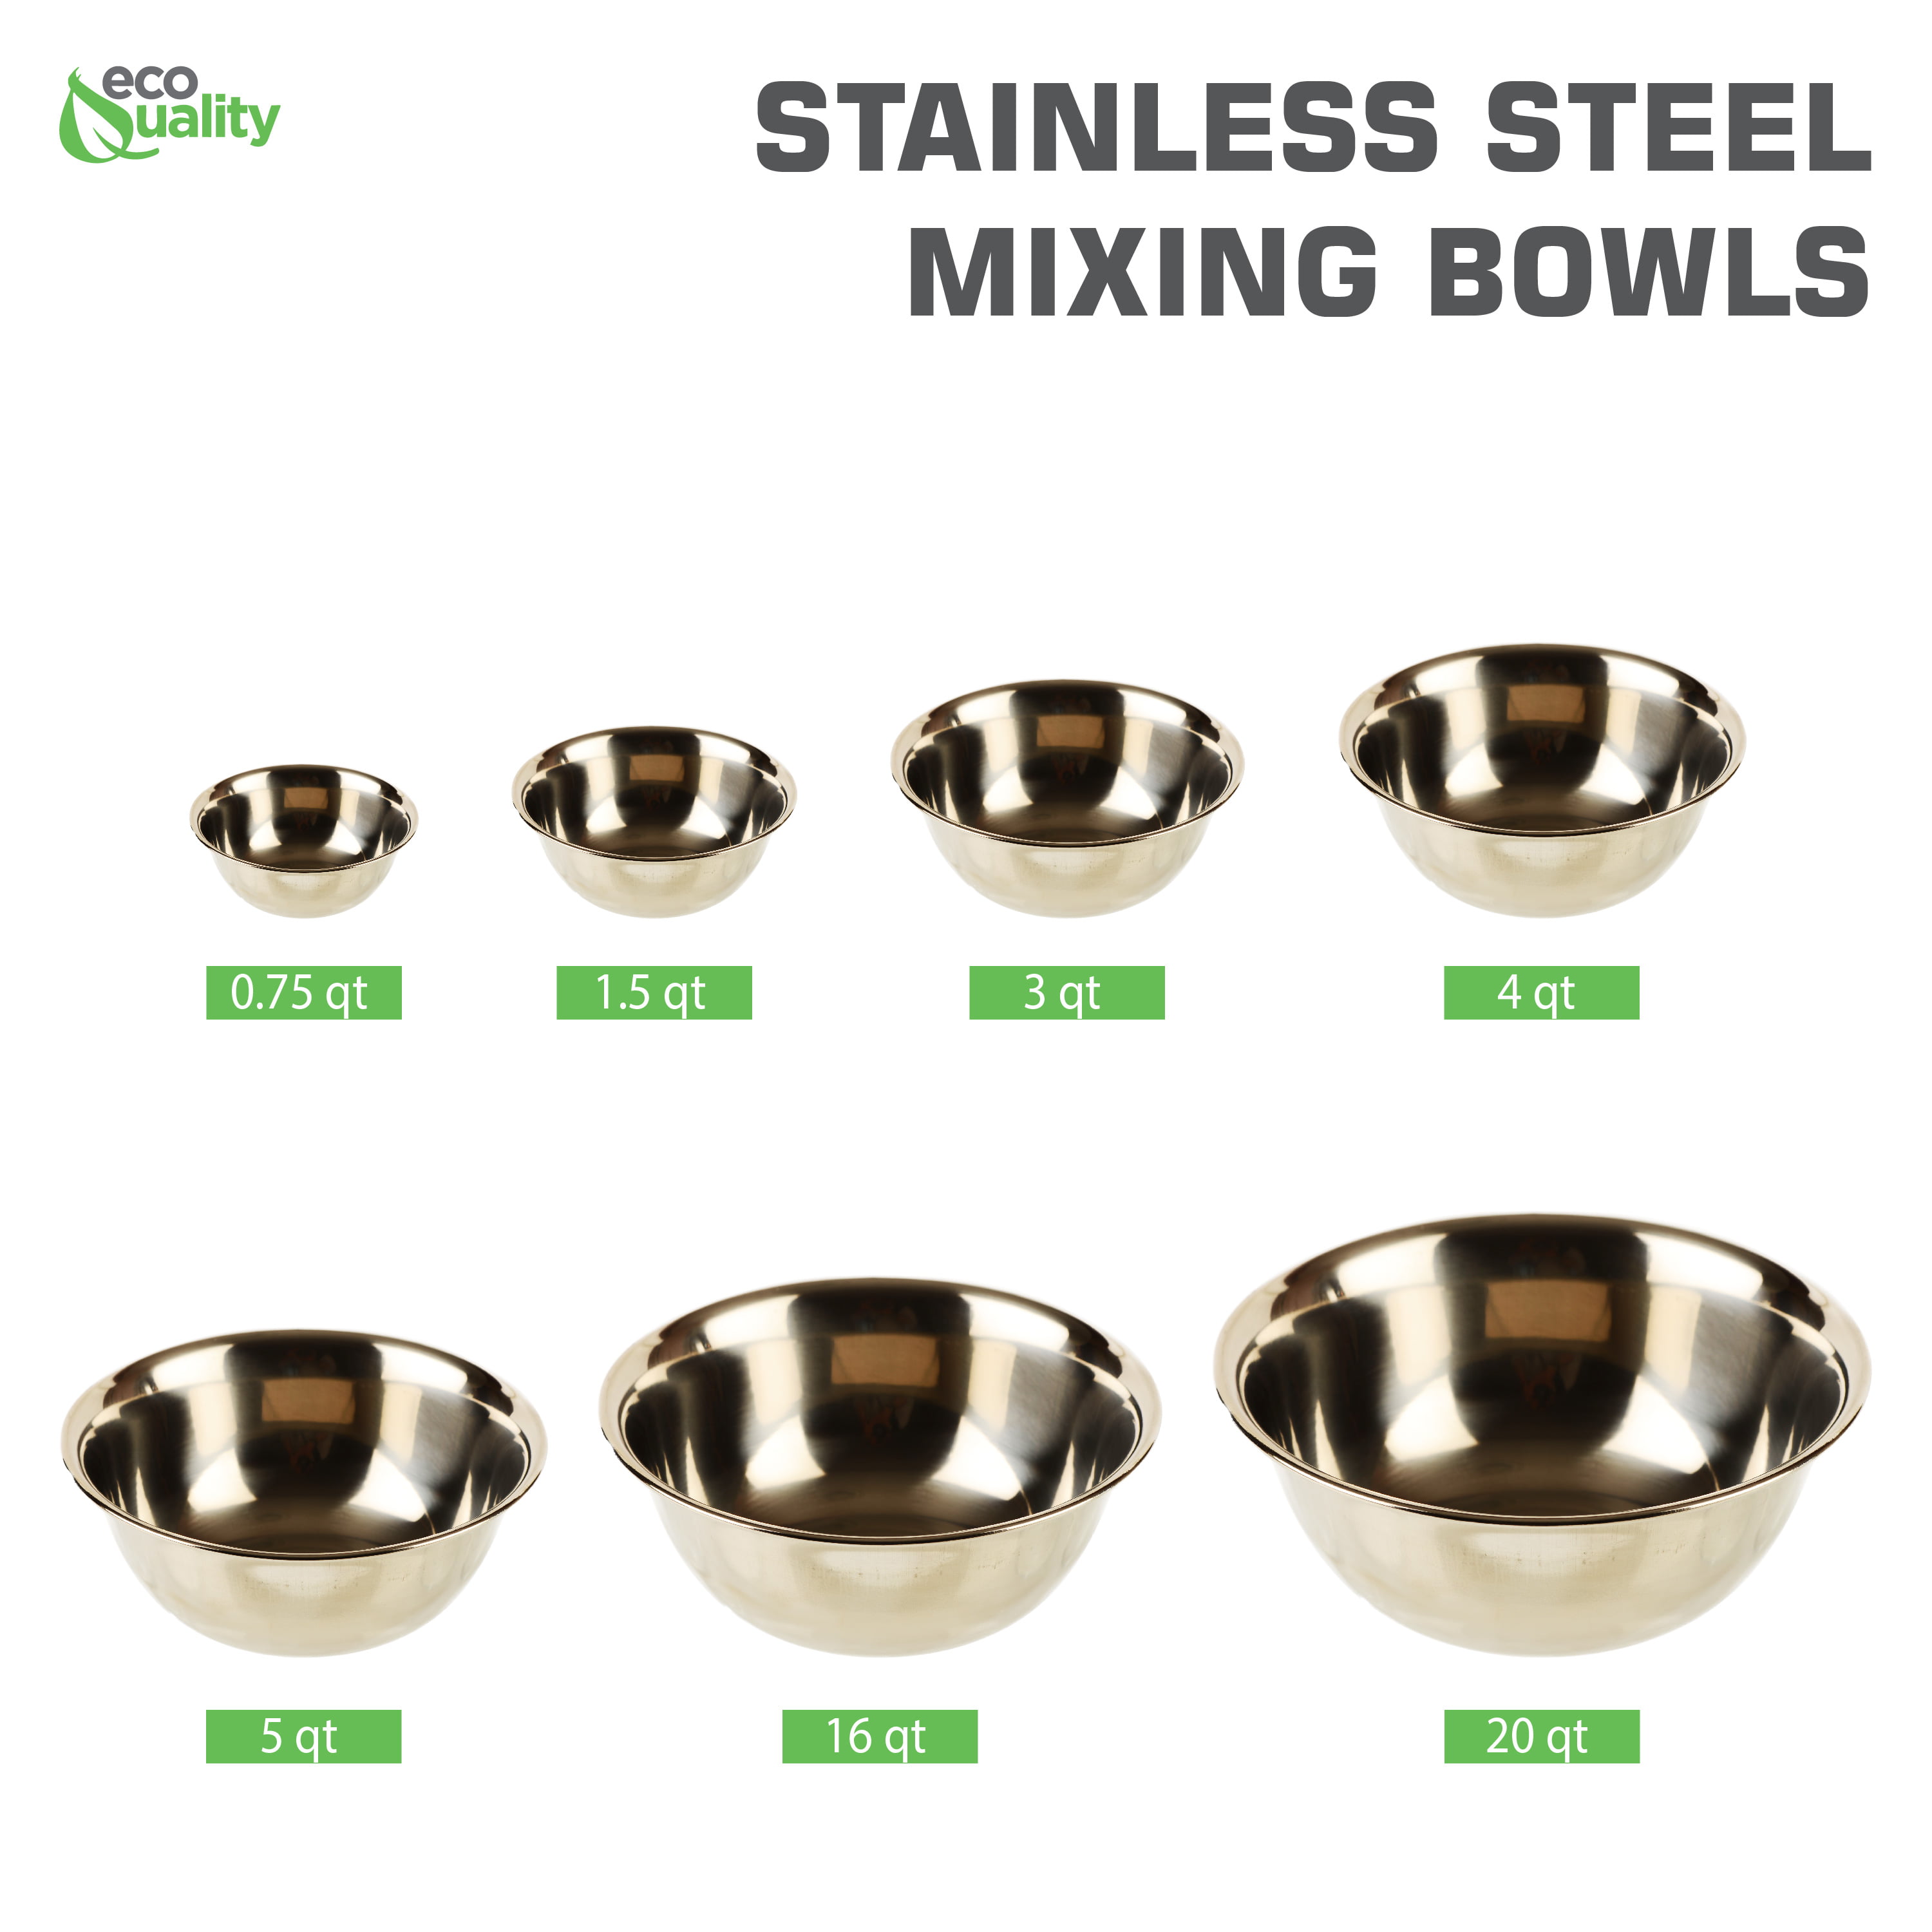  AtHomeBaking Stainless Steel Mixing Bowl - 10 inch - 5 Quart -  Metal Mixing Bowls - 304 Stainless Steel Mixing Bowls - Baking Bowl: Home &  Kitchen